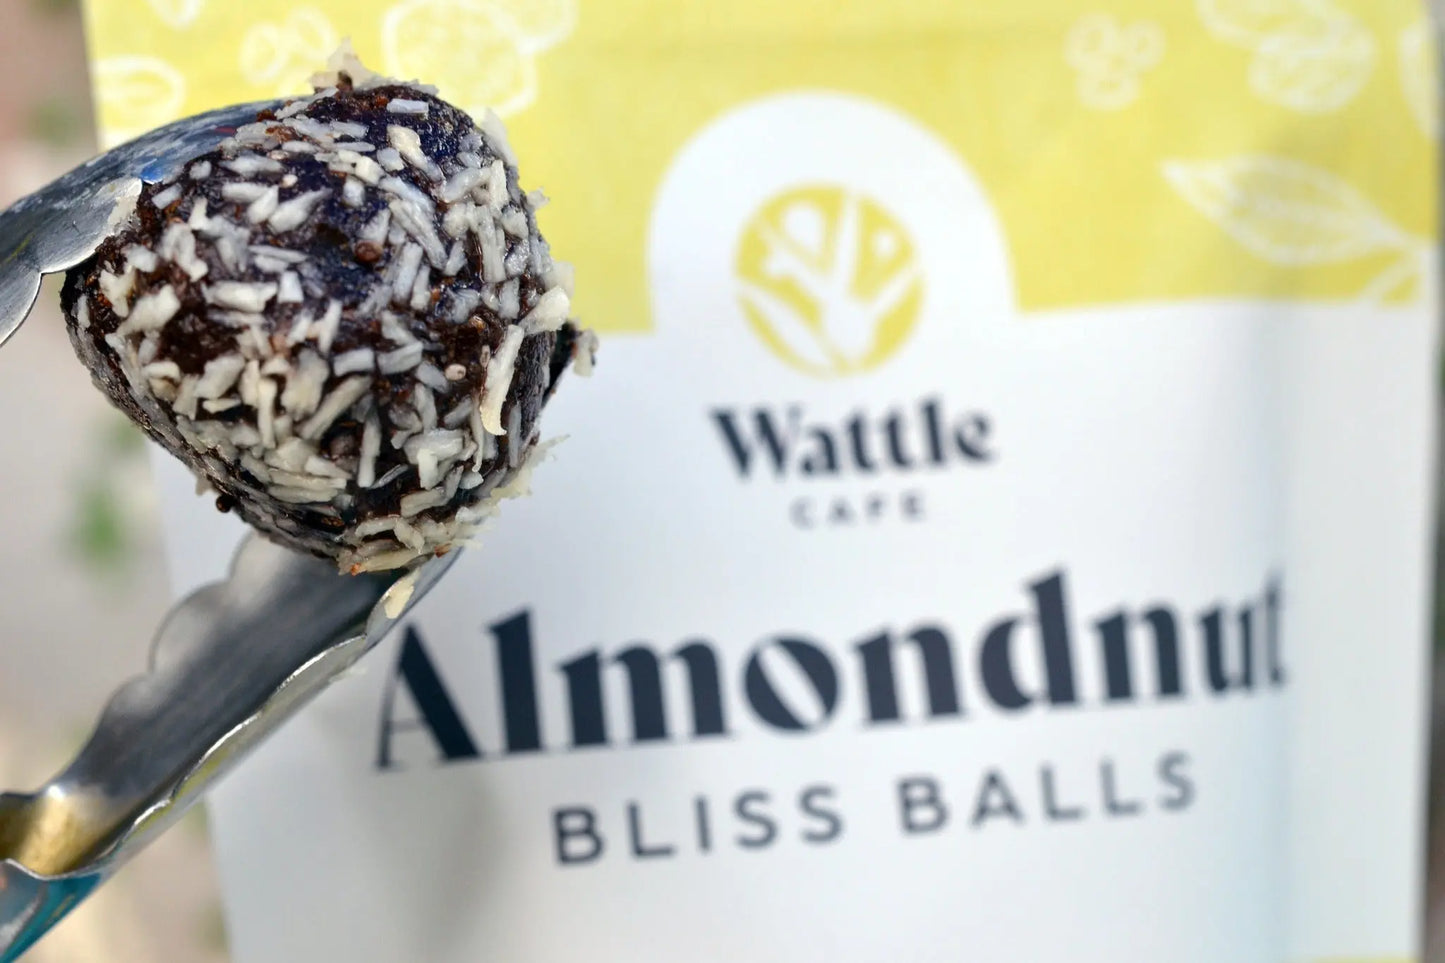 Wattle cafe Almondnut bliss balls